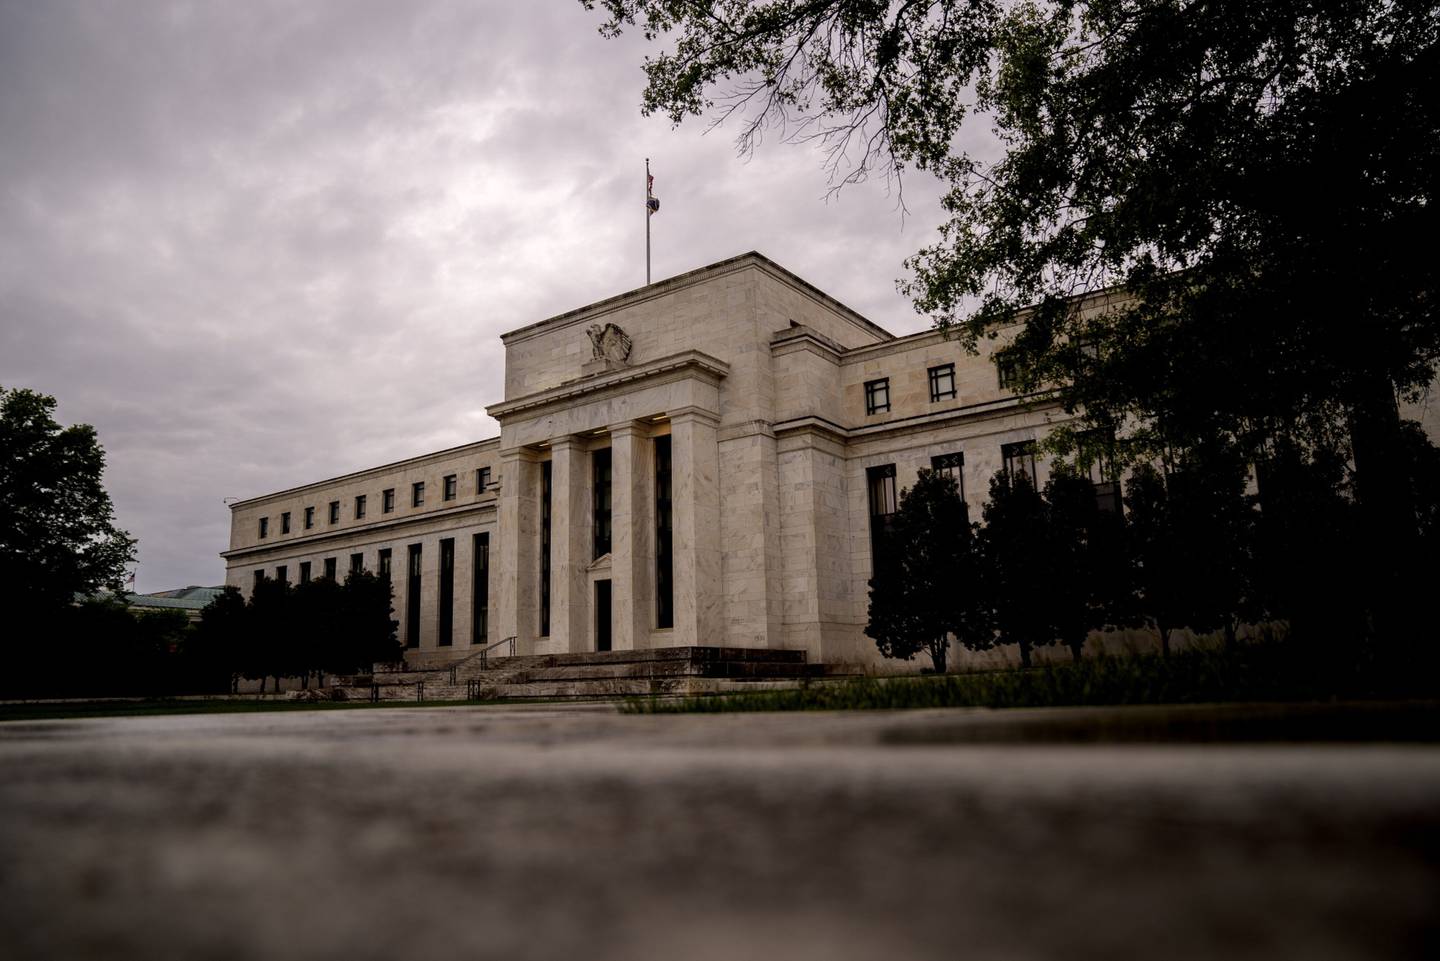 La sede de la Reserva Federal